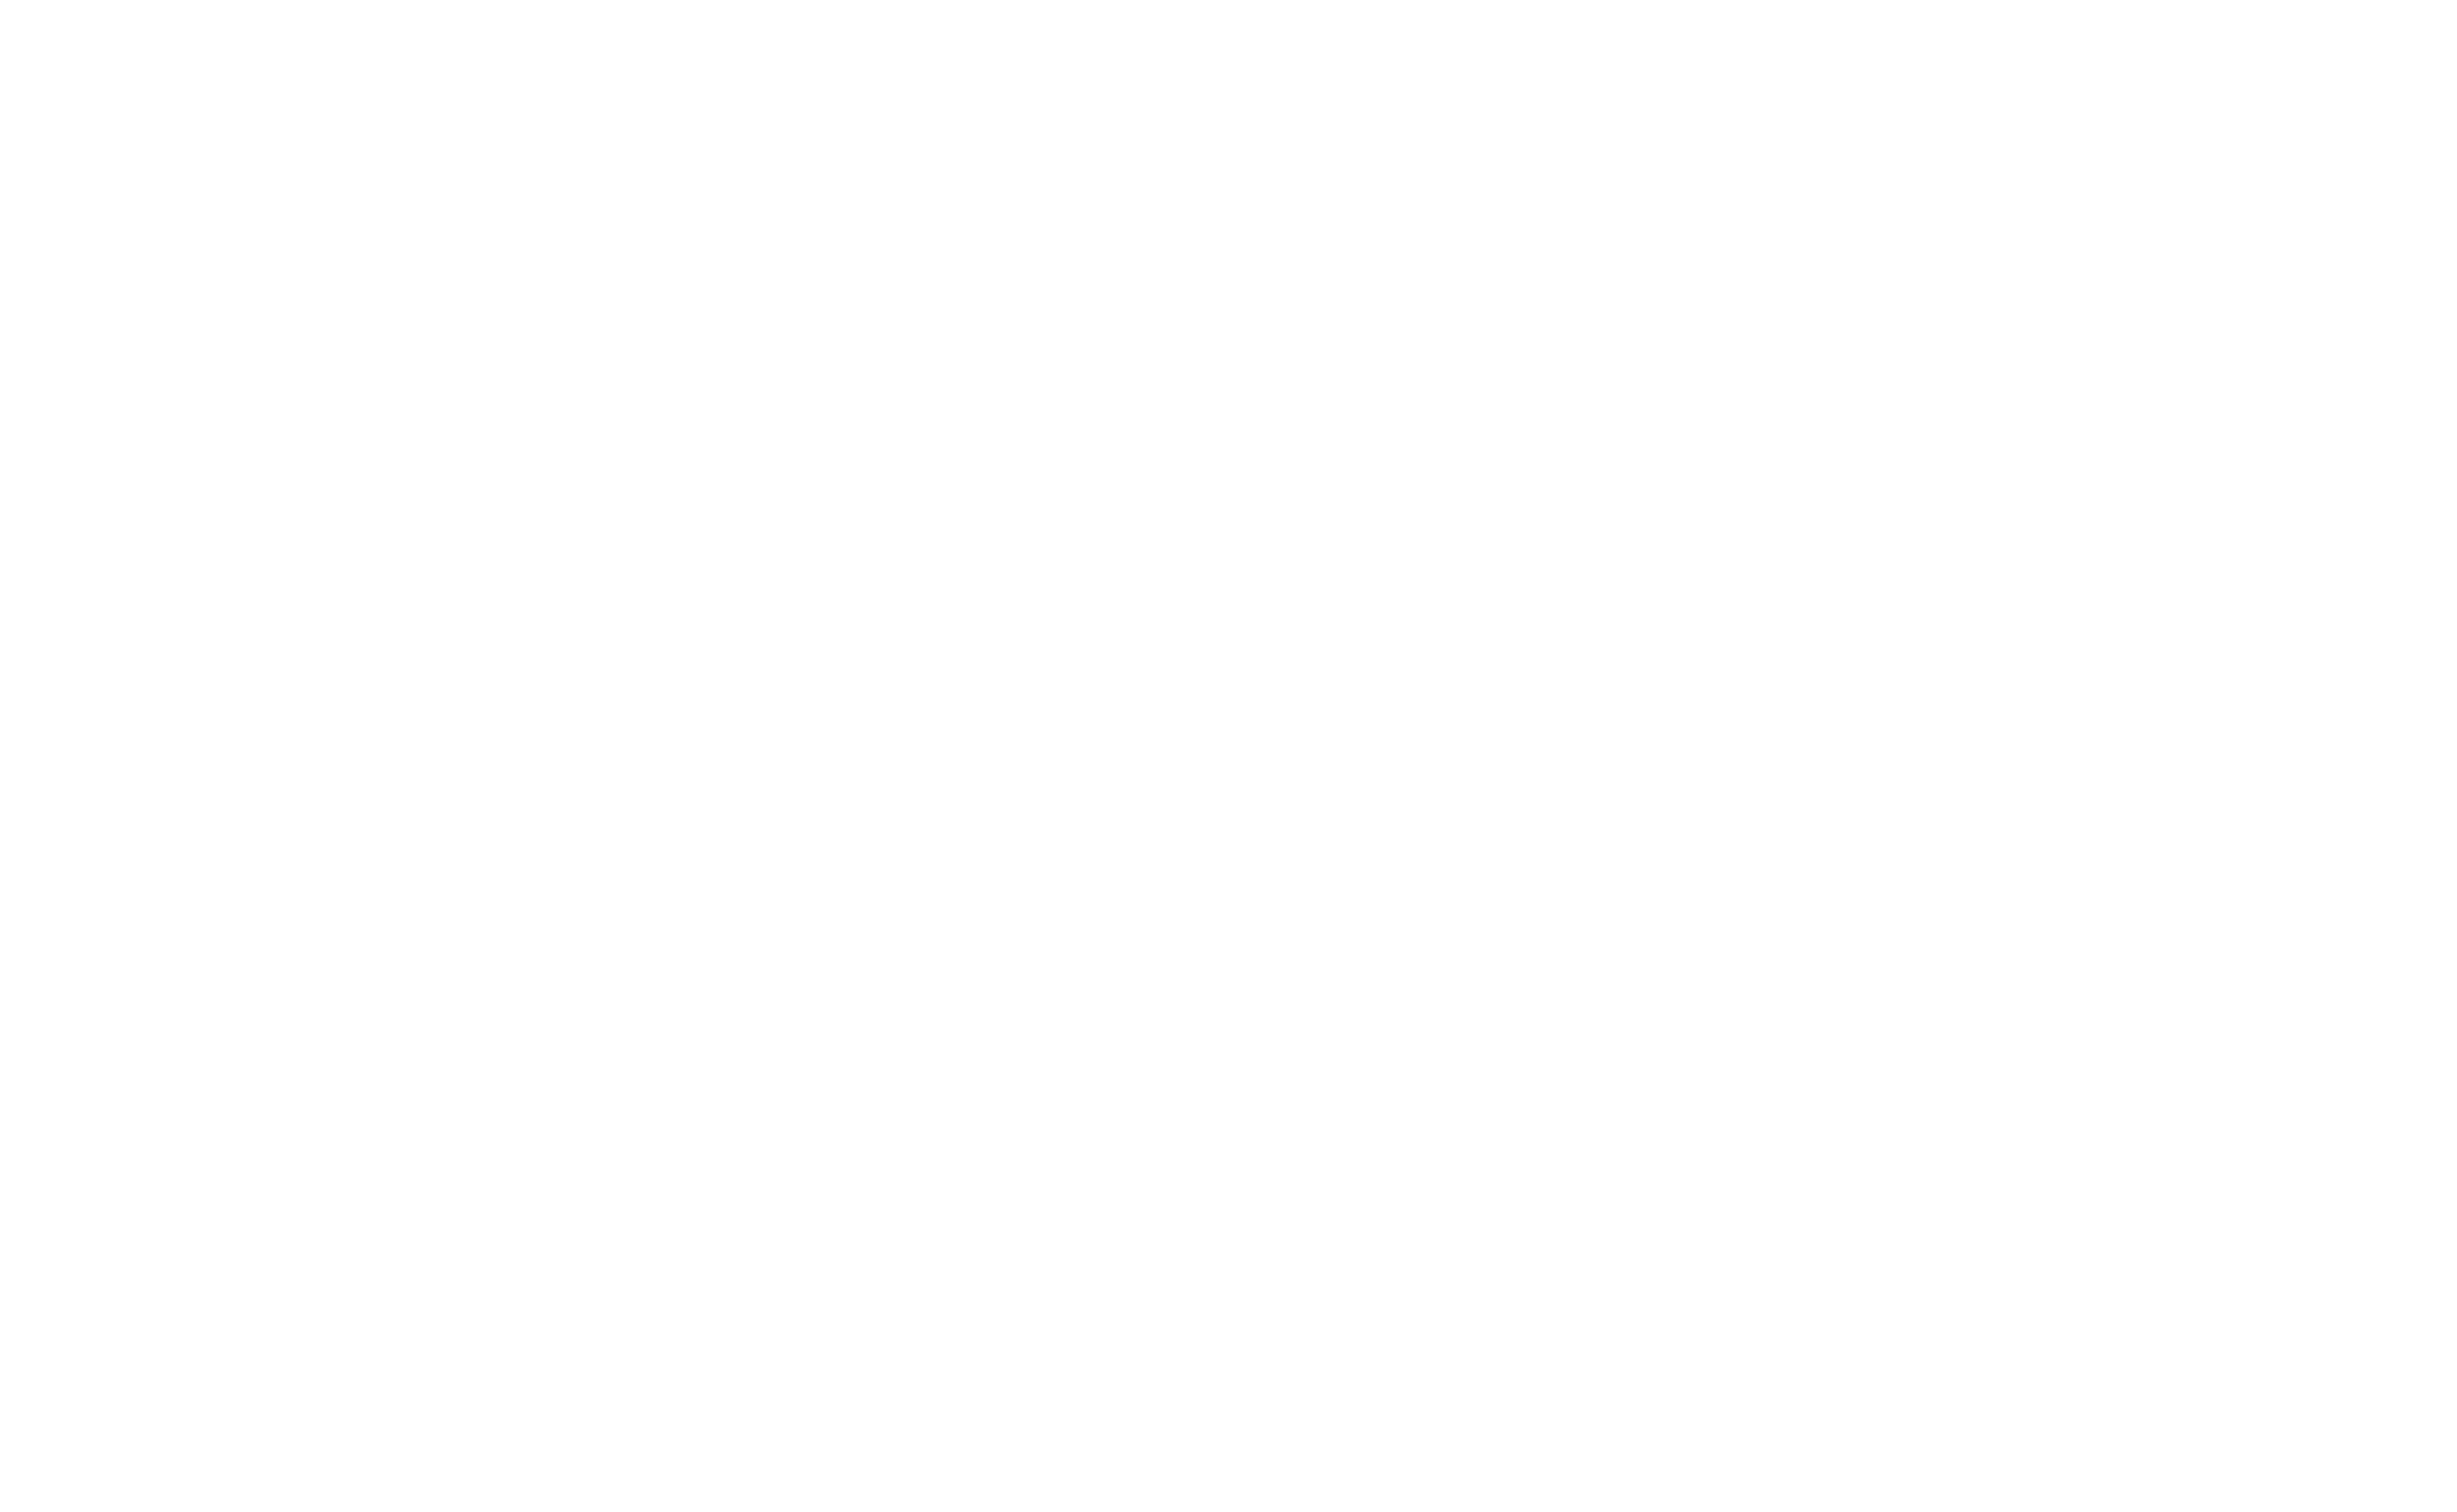 Havas CX helia